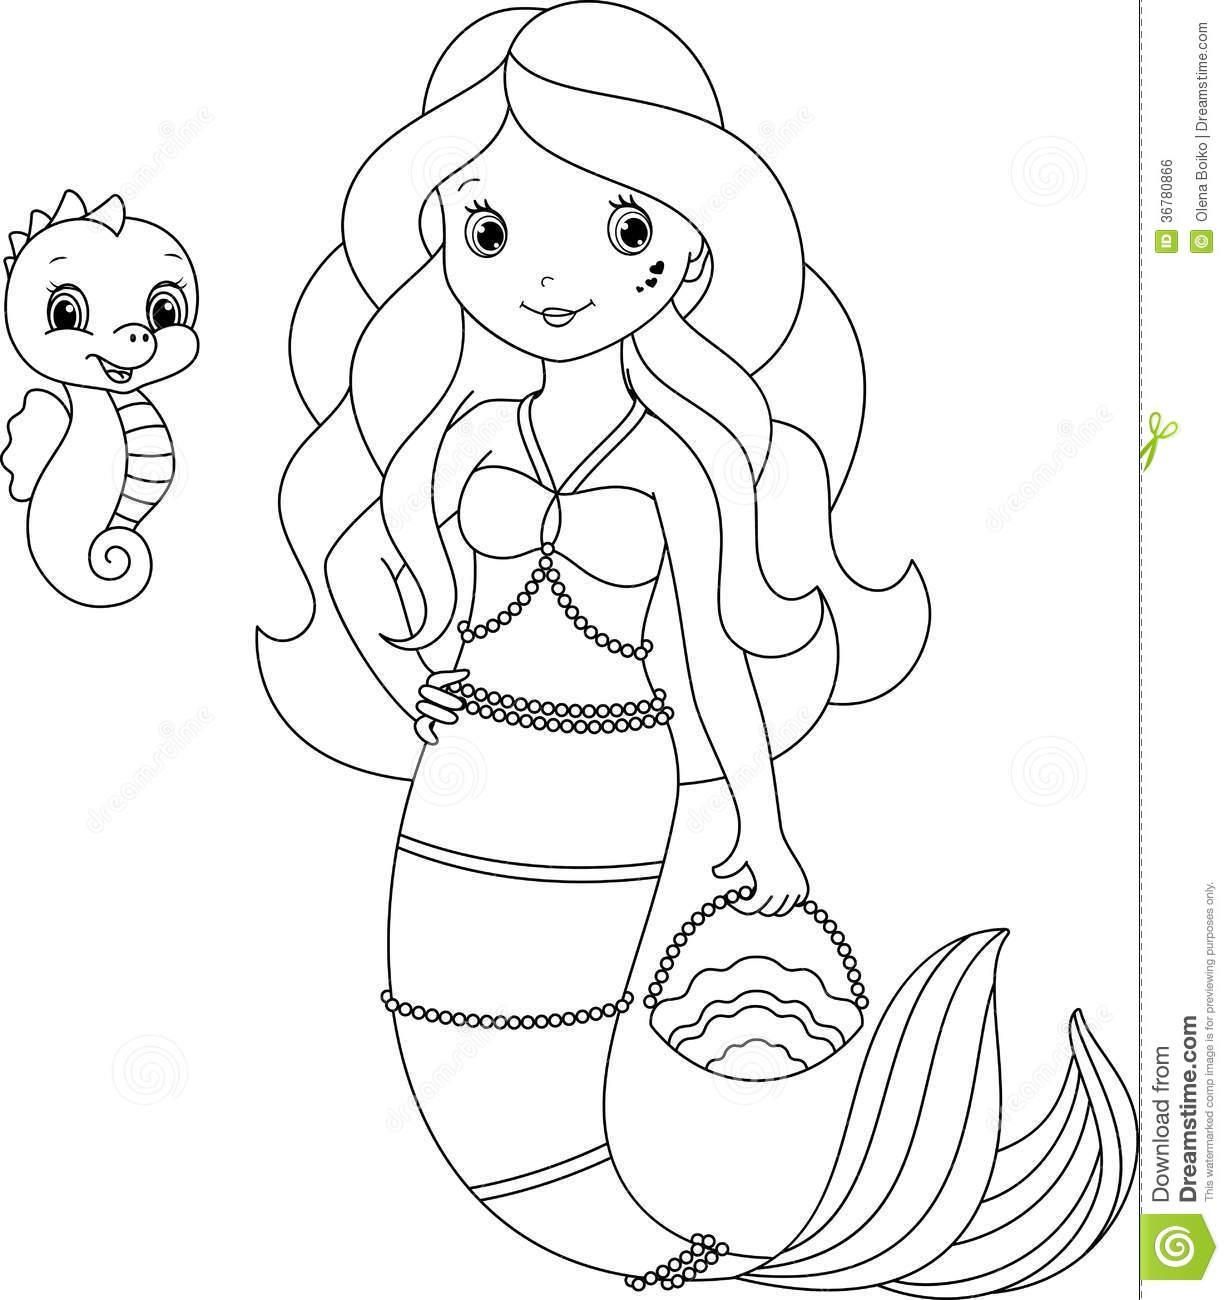 Simple Mermaid Coloring Pages at GetColorings.com | Free printable